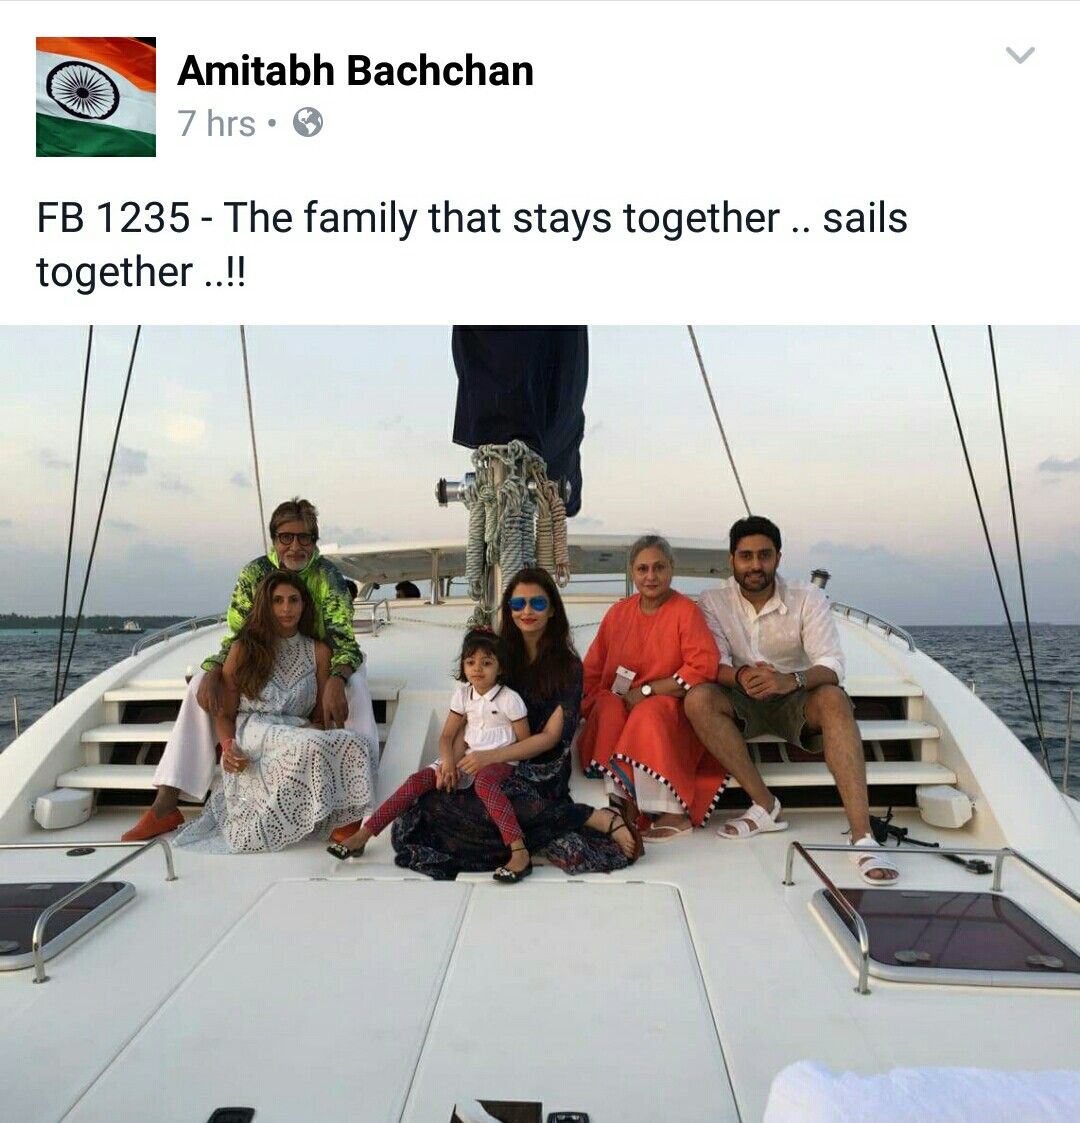 The Bachchans